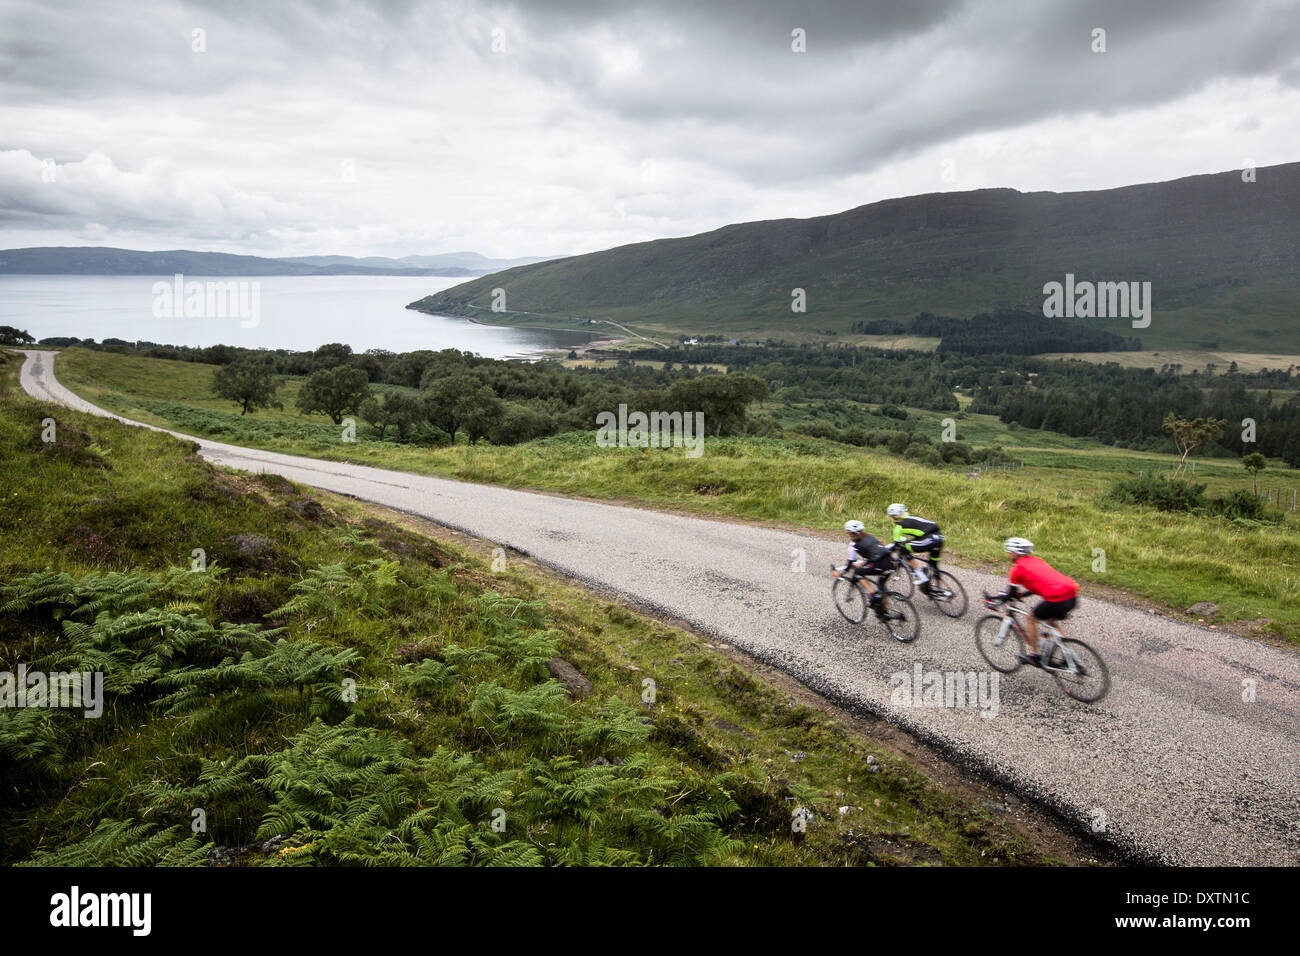 Three cyclists take on Britain's longest road climb in Lochcarron, Scotland Stock Photo